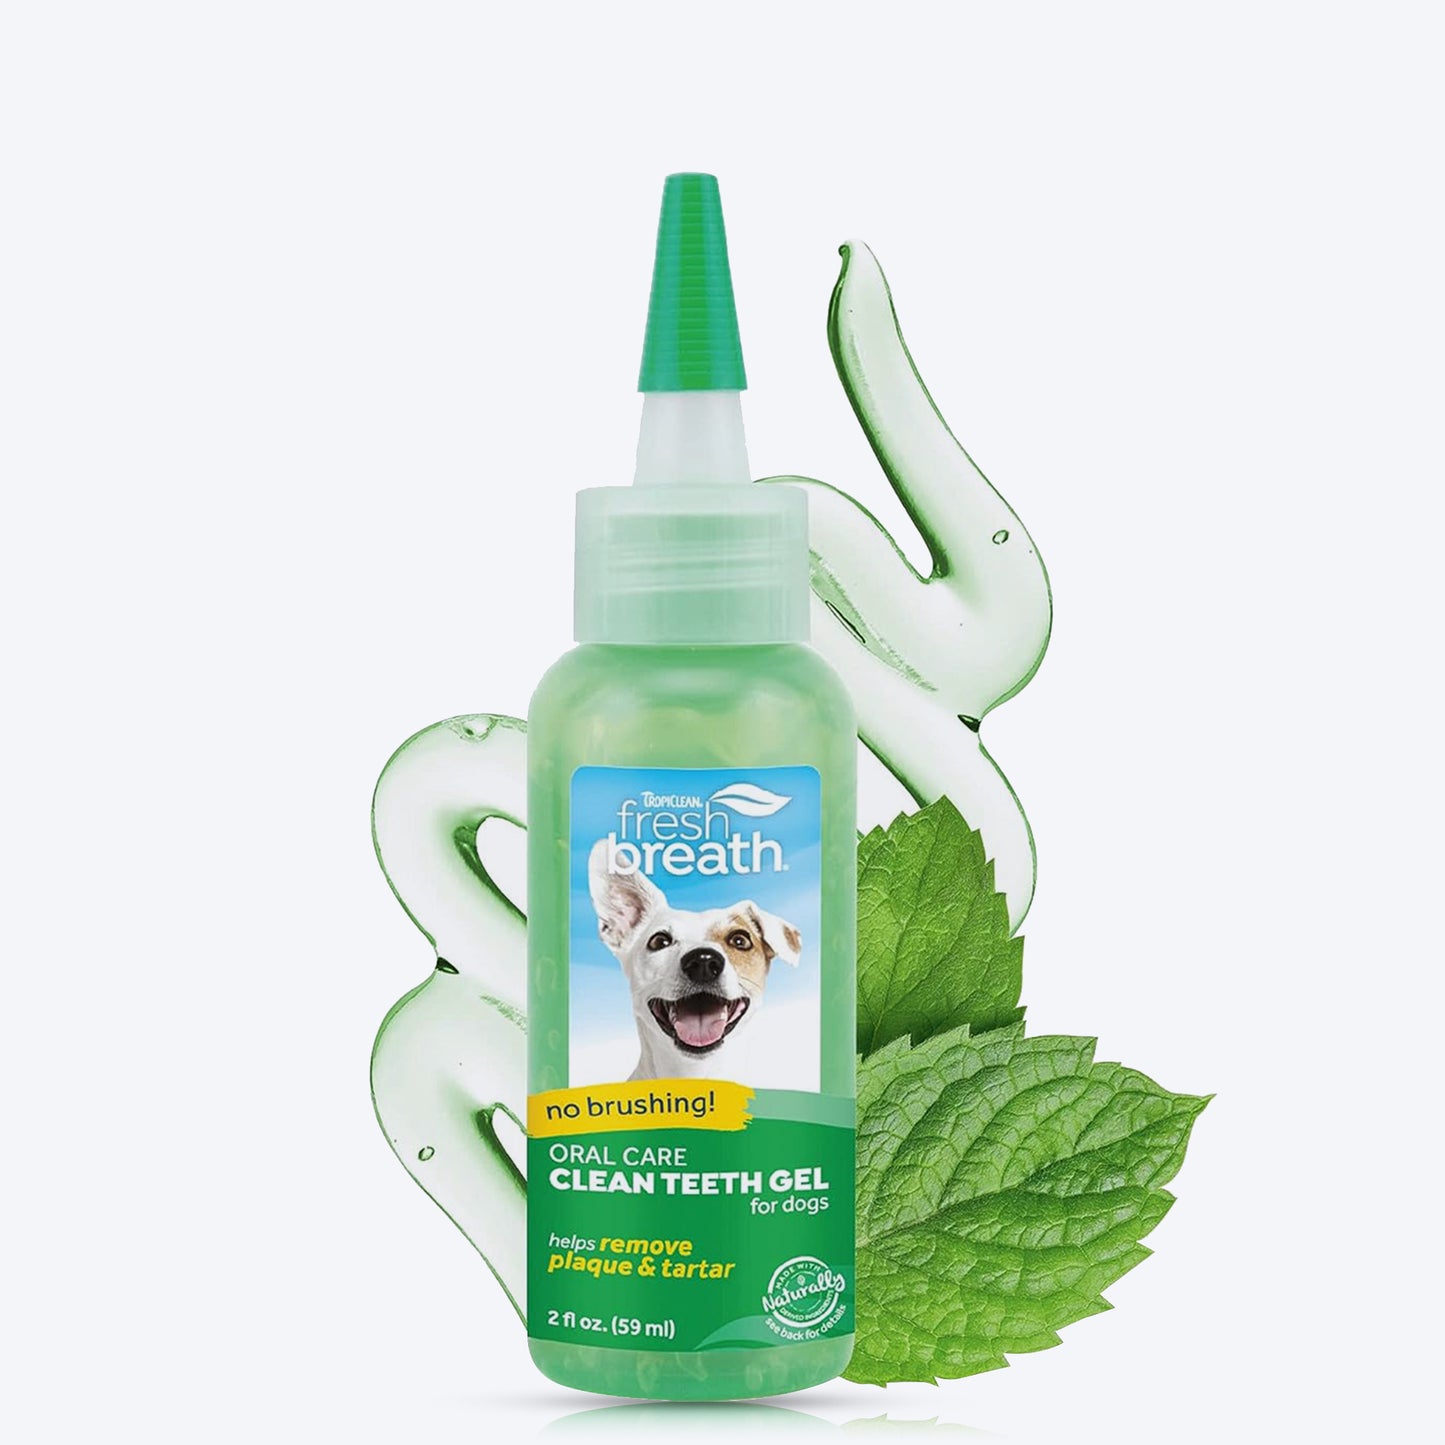 Tropiclean Fresh Breath Clean Teeth Gel for Dogs - Mint - 59 ml -01